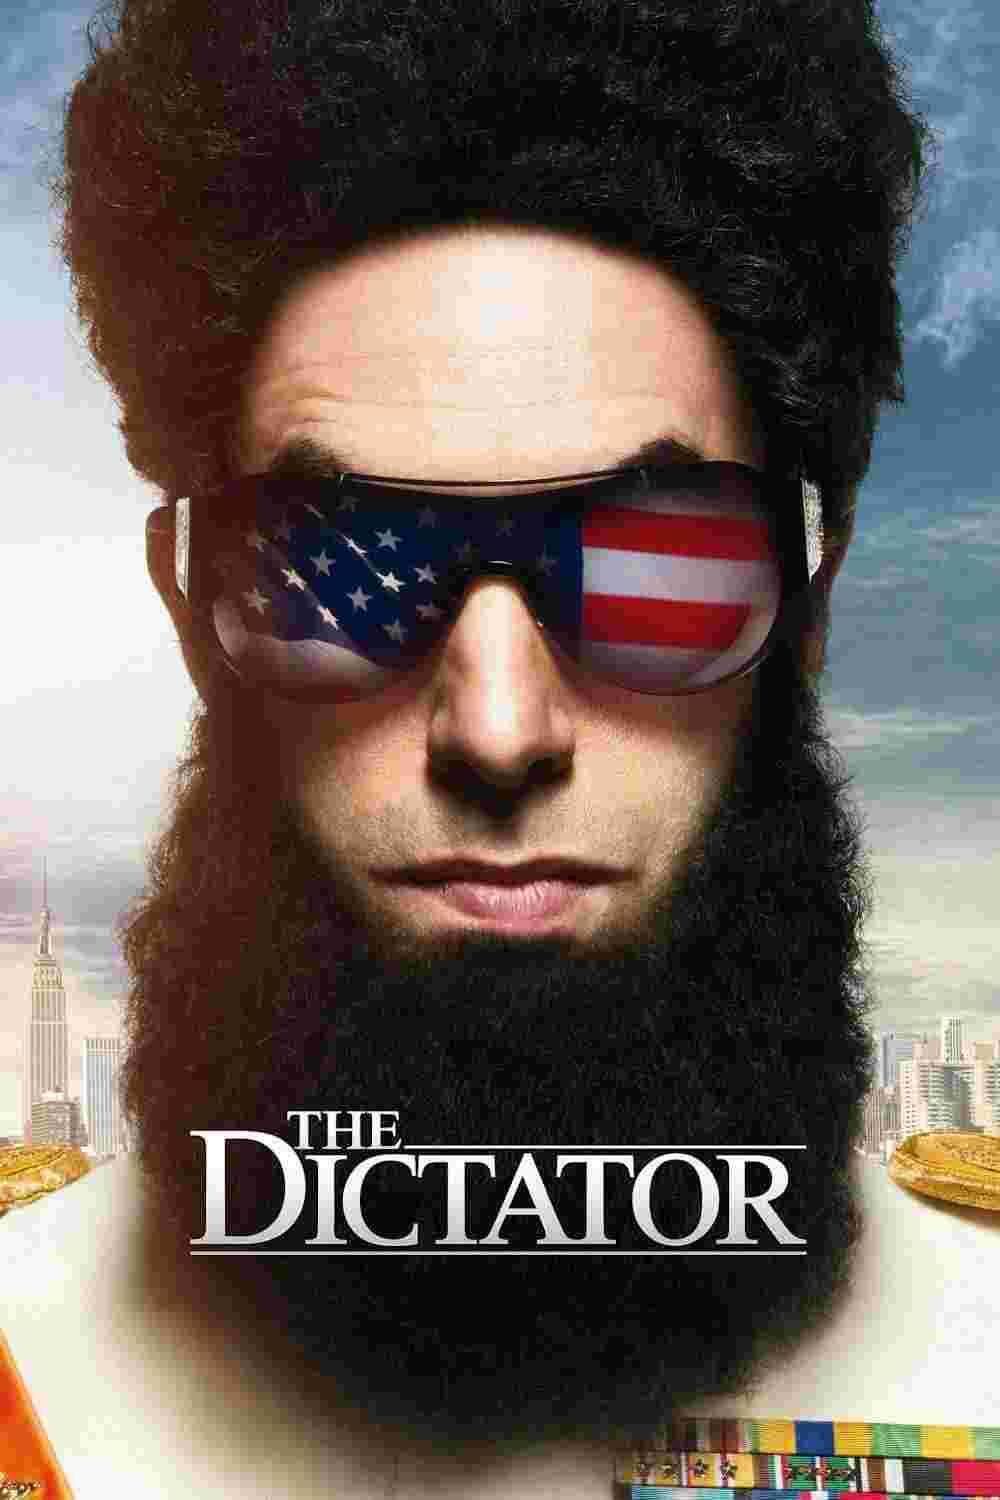 The Dictator (2012) Sacha Baron Cohen